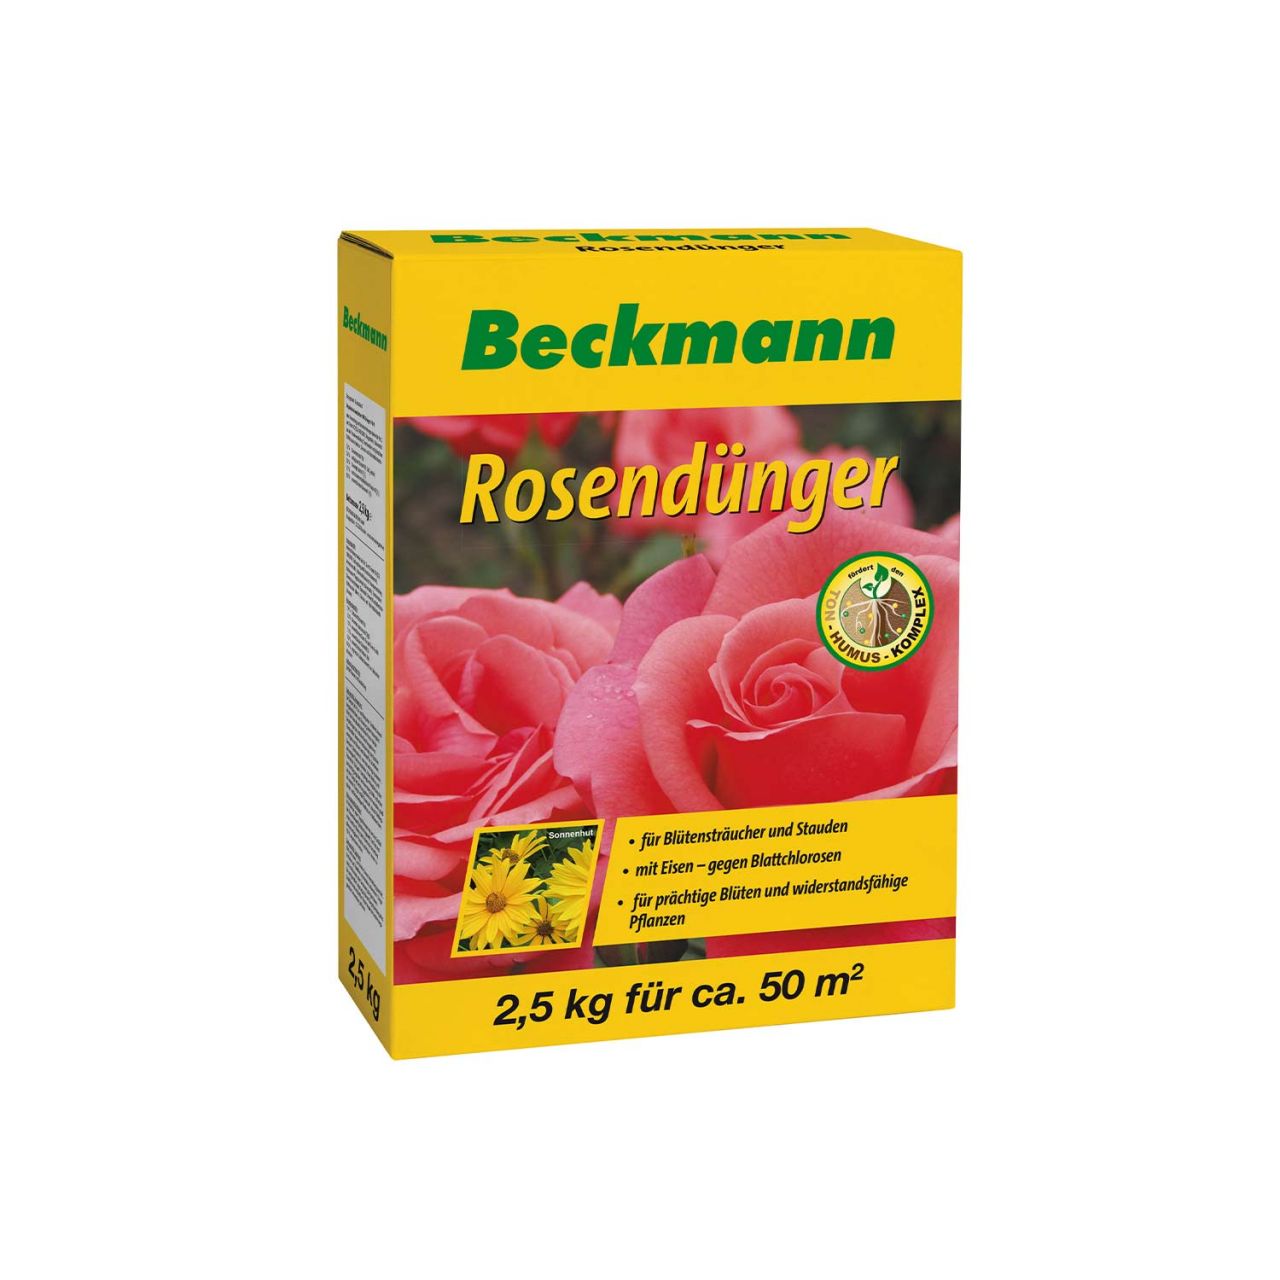 Kategorie <b>Produkt ohne Kategoriezuordnung </b> - Rosendünger - 2,5 kg - Beckmann - 